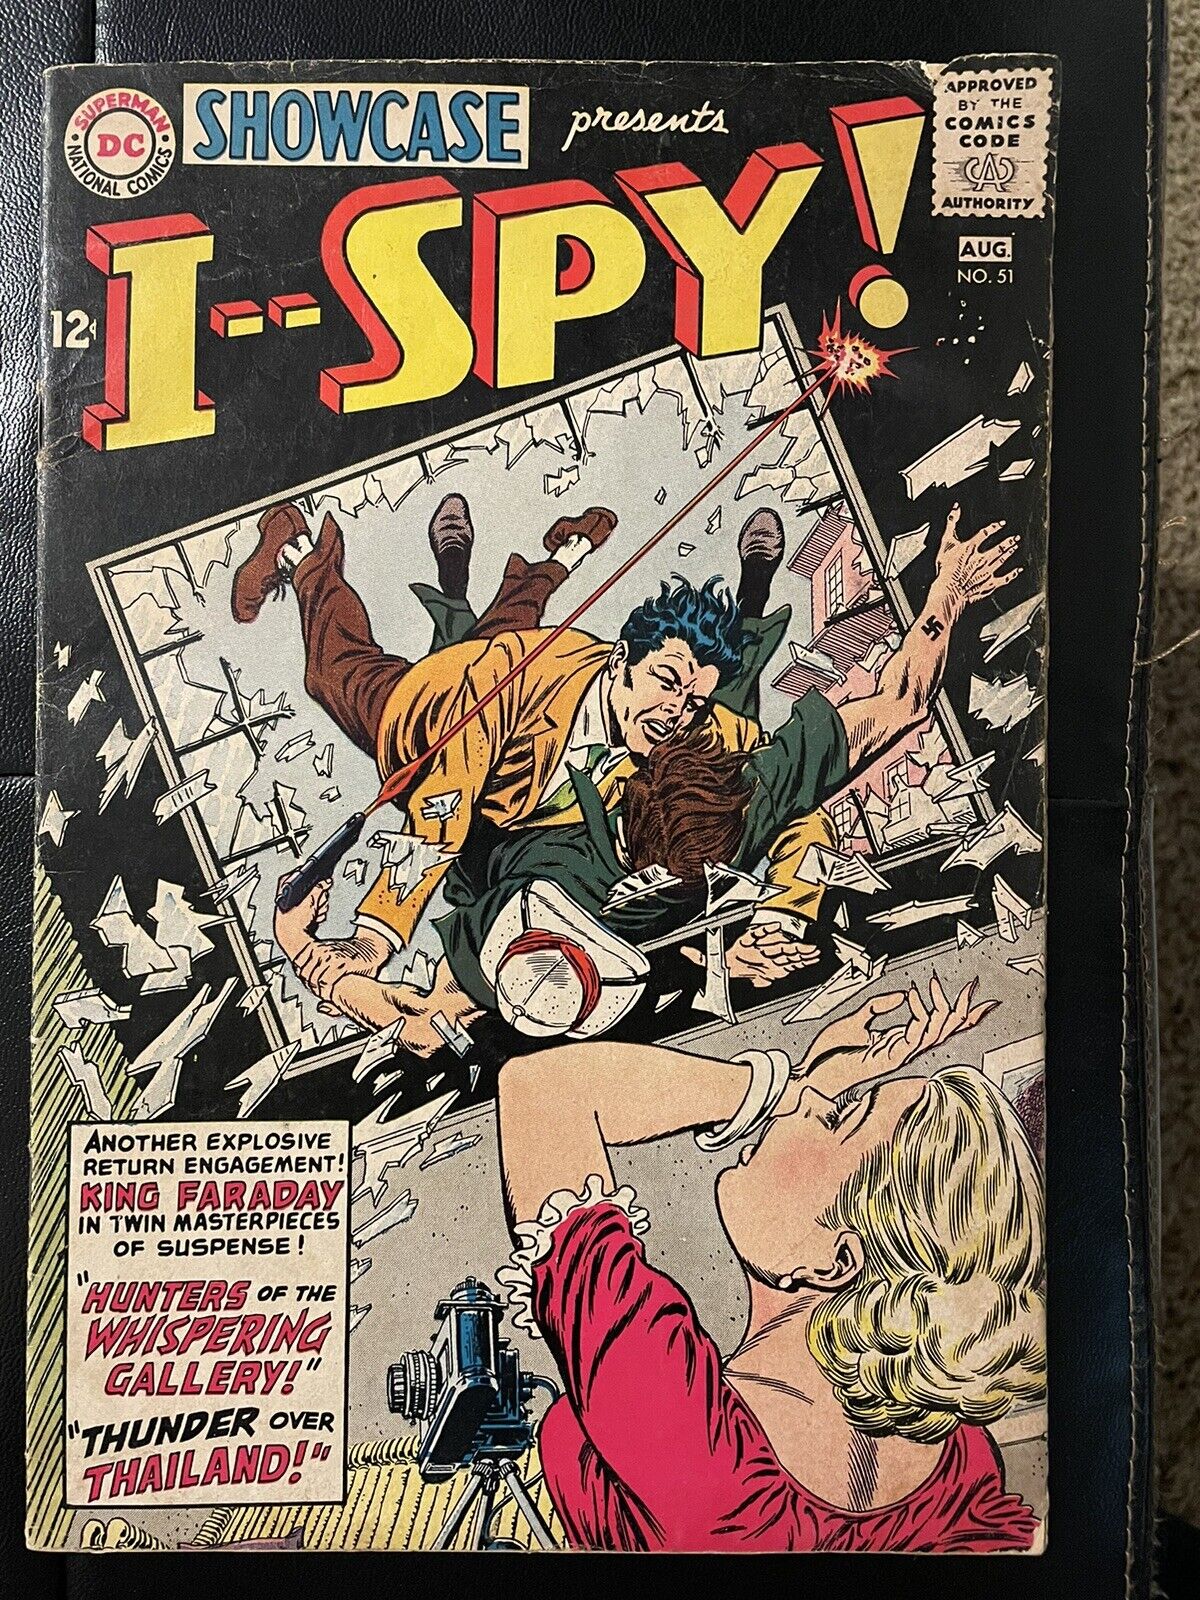 Showcase #51 - I Spy (DC, 1964) Fine-